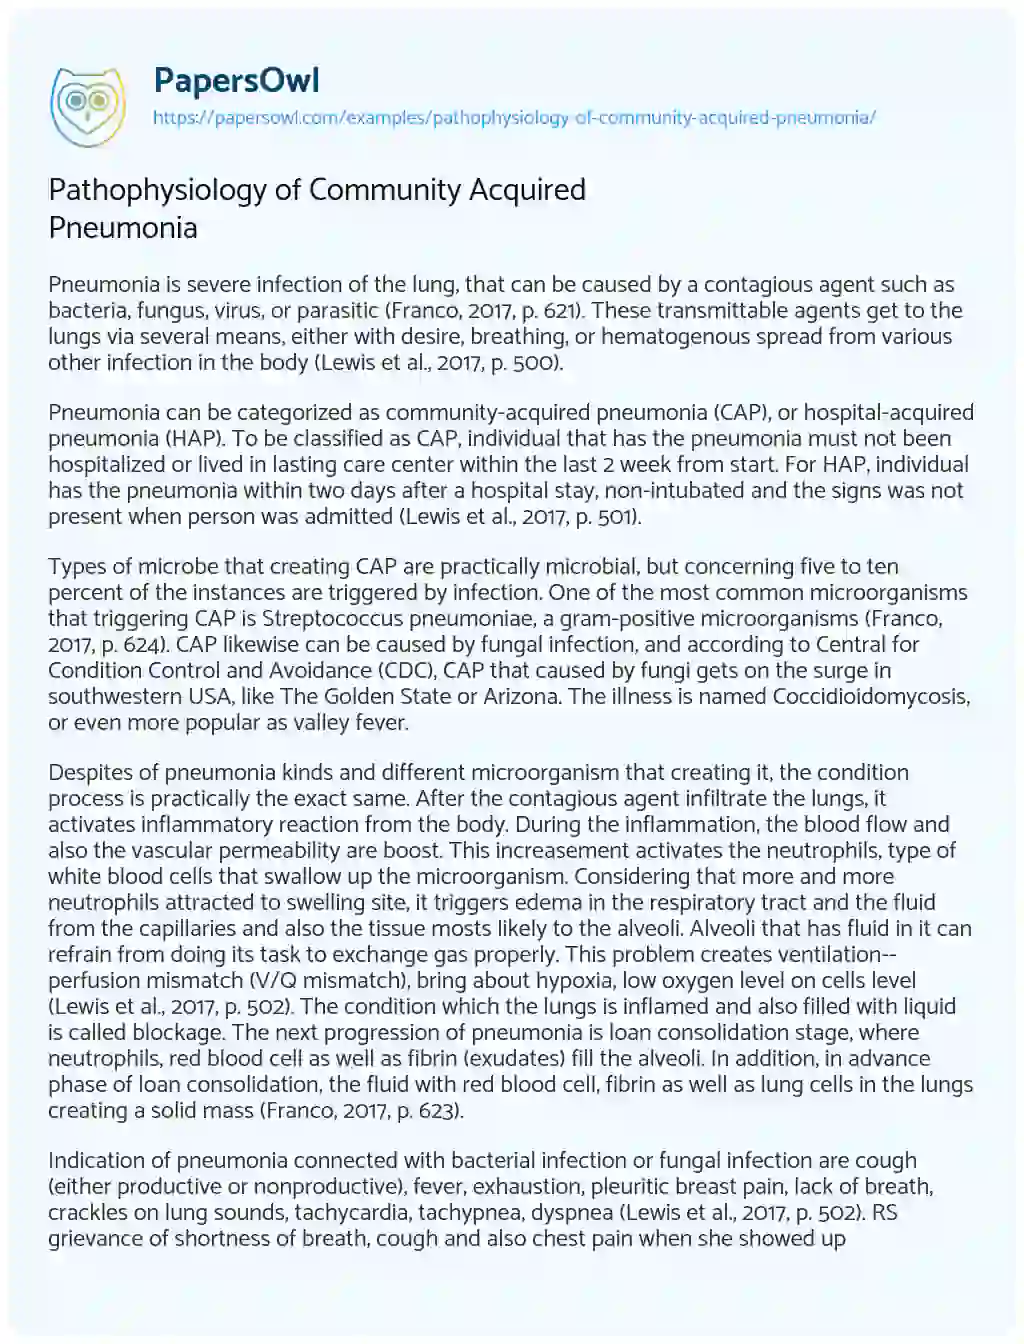 Pathophysiology of Community Acquired Pneumonia essay